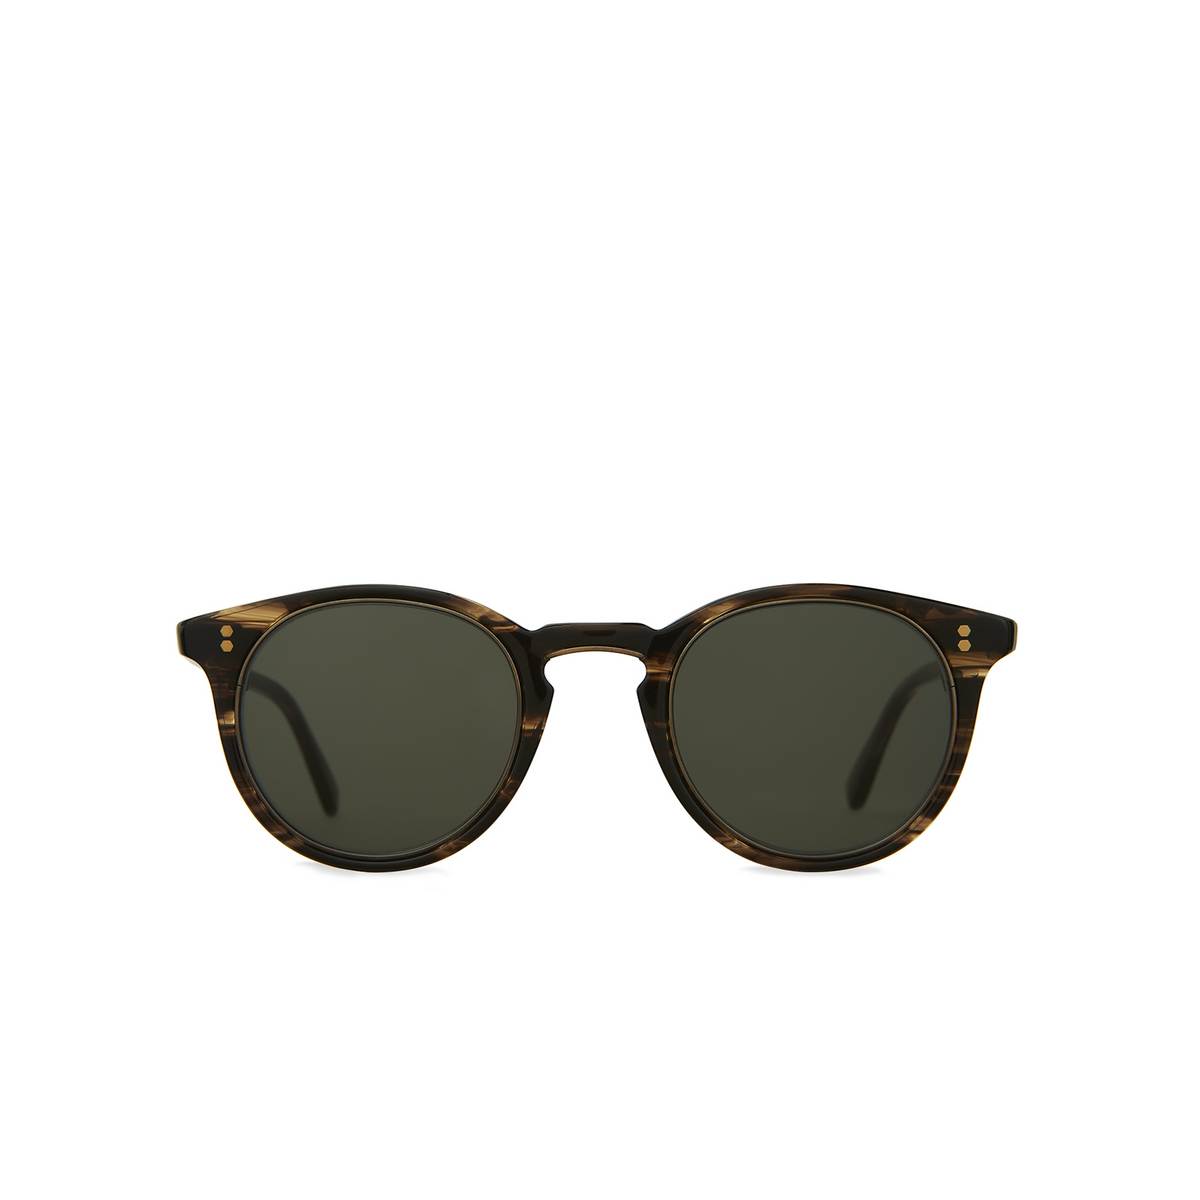 Mr. Leight CROSBY S Sunglasses PTT-ATG/G15 Porter Tortoise - Antique Gold - front view